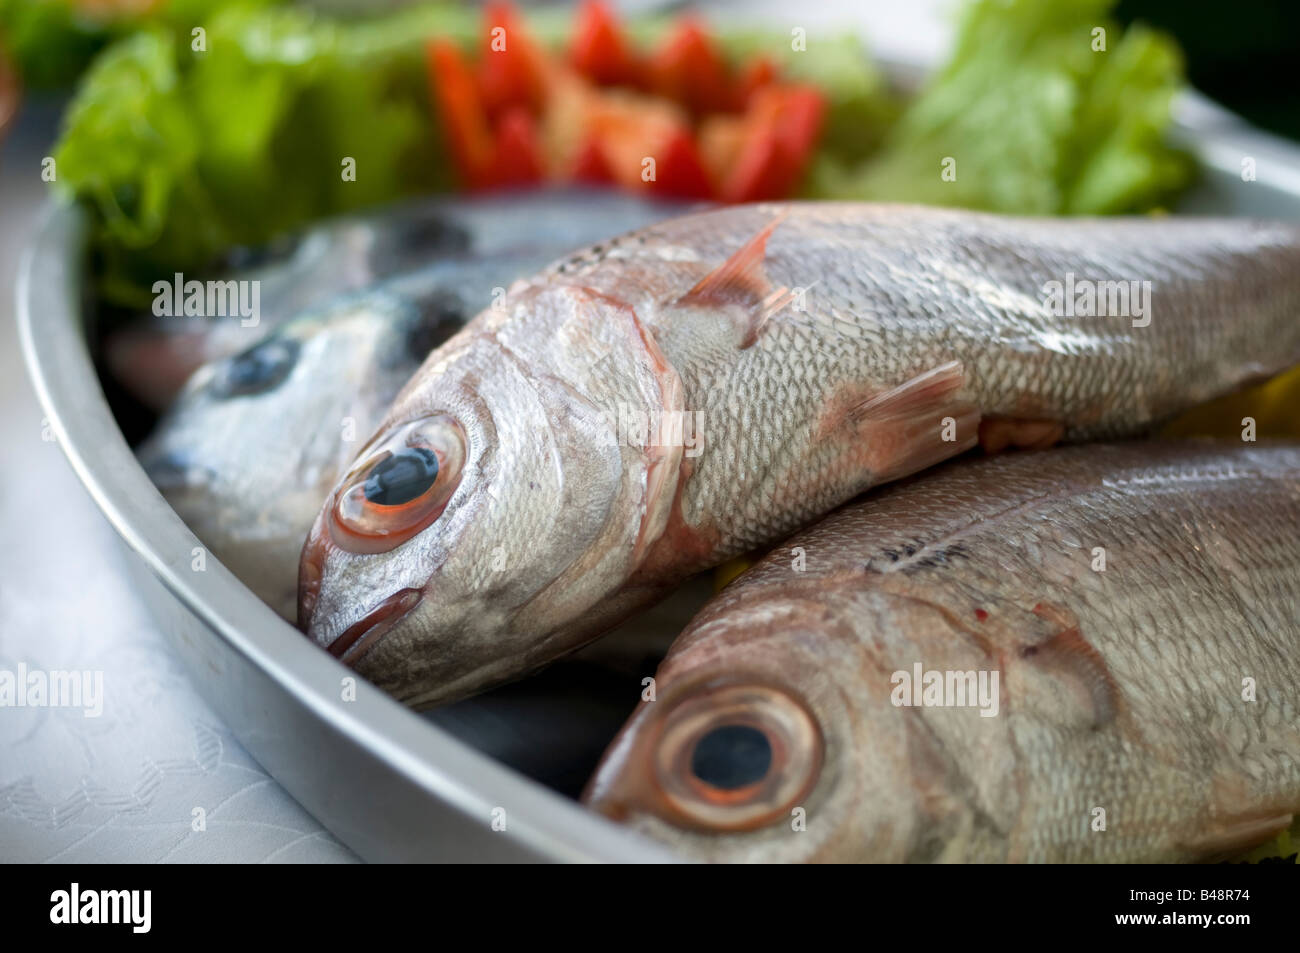 Alcuni cardinalfishes sopra un vassoio con verdure Foto Stock